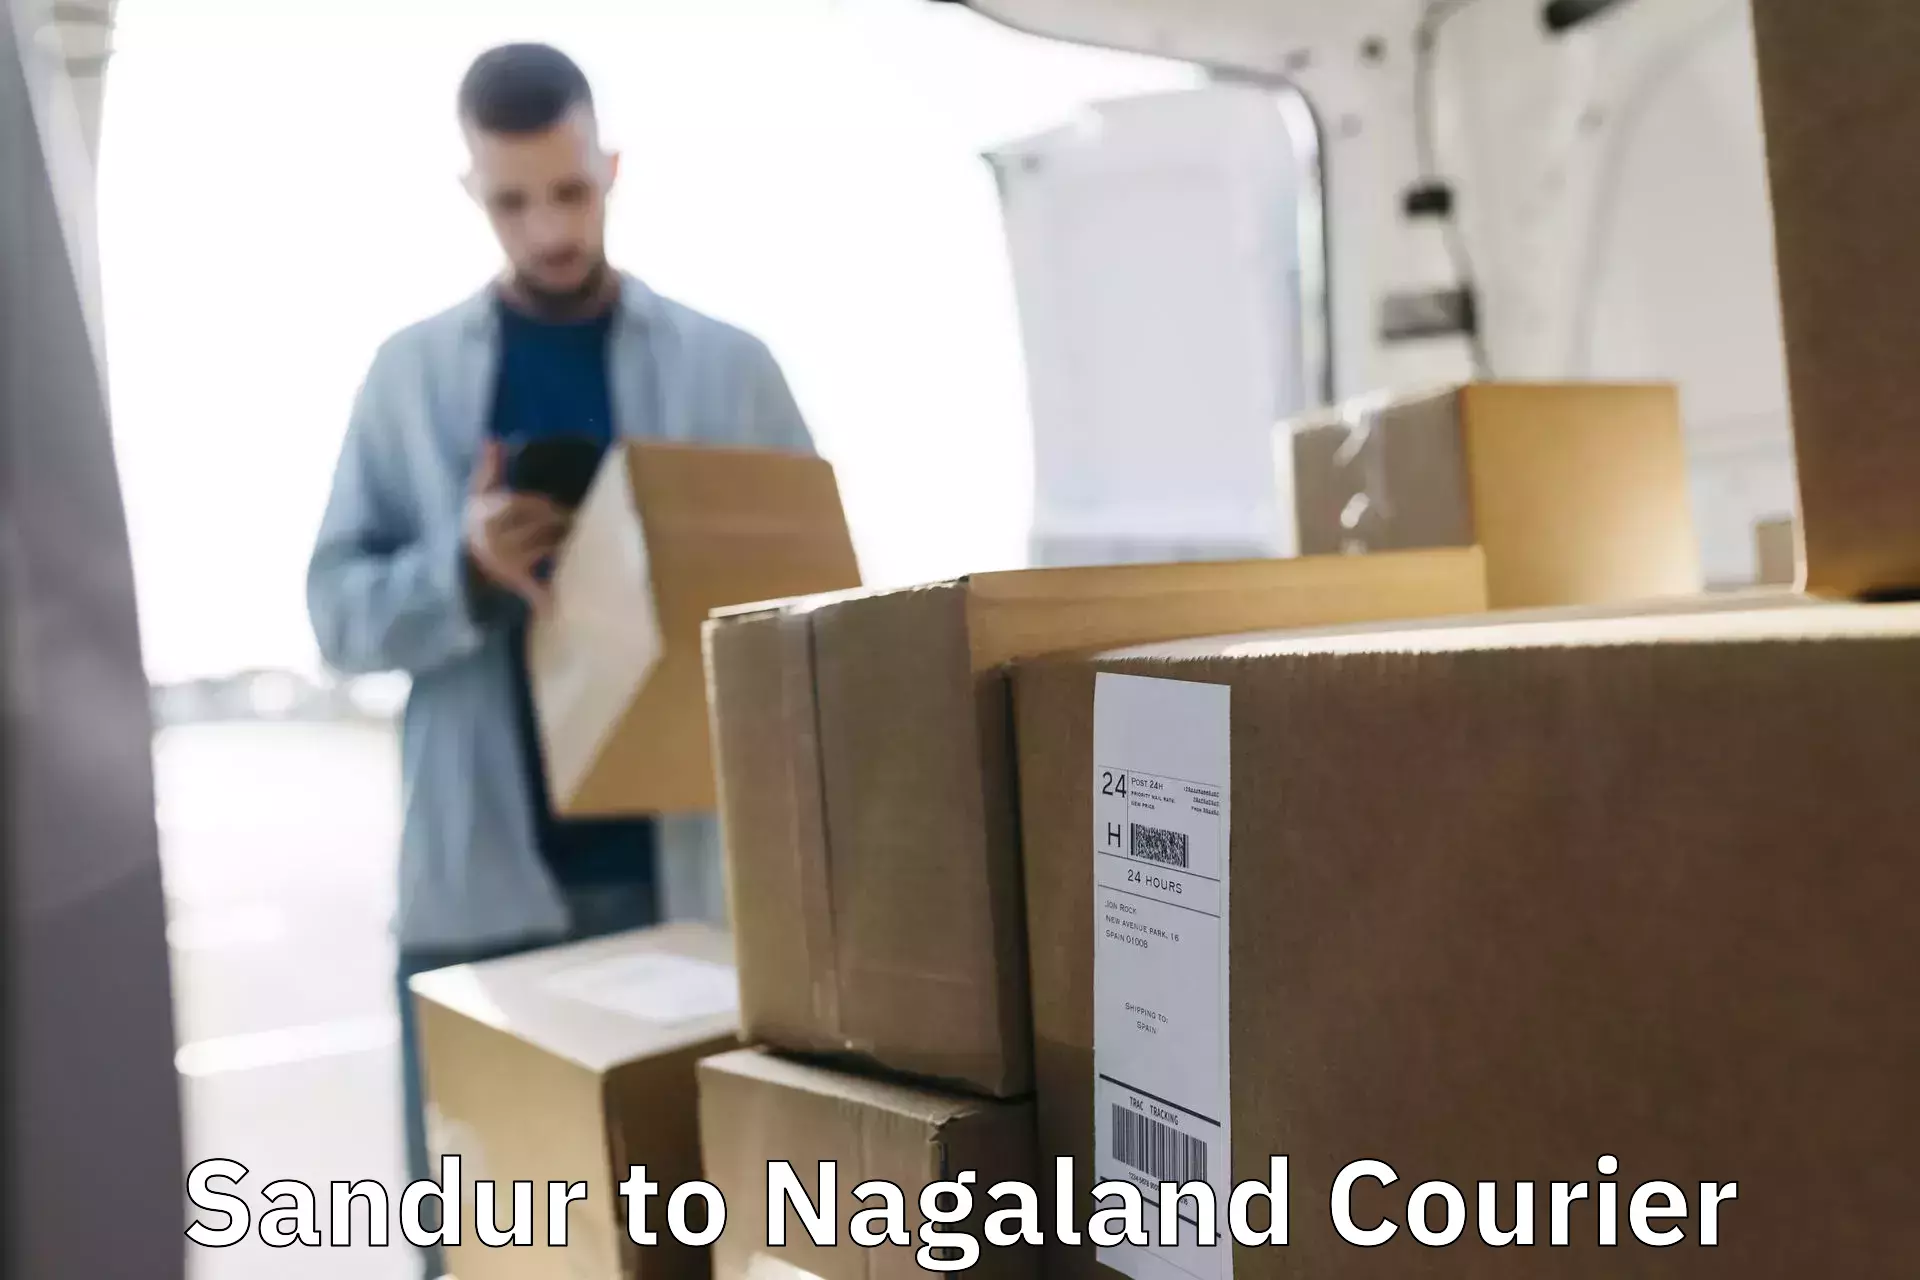 Specialized shipment handling Sandur to Nagaland